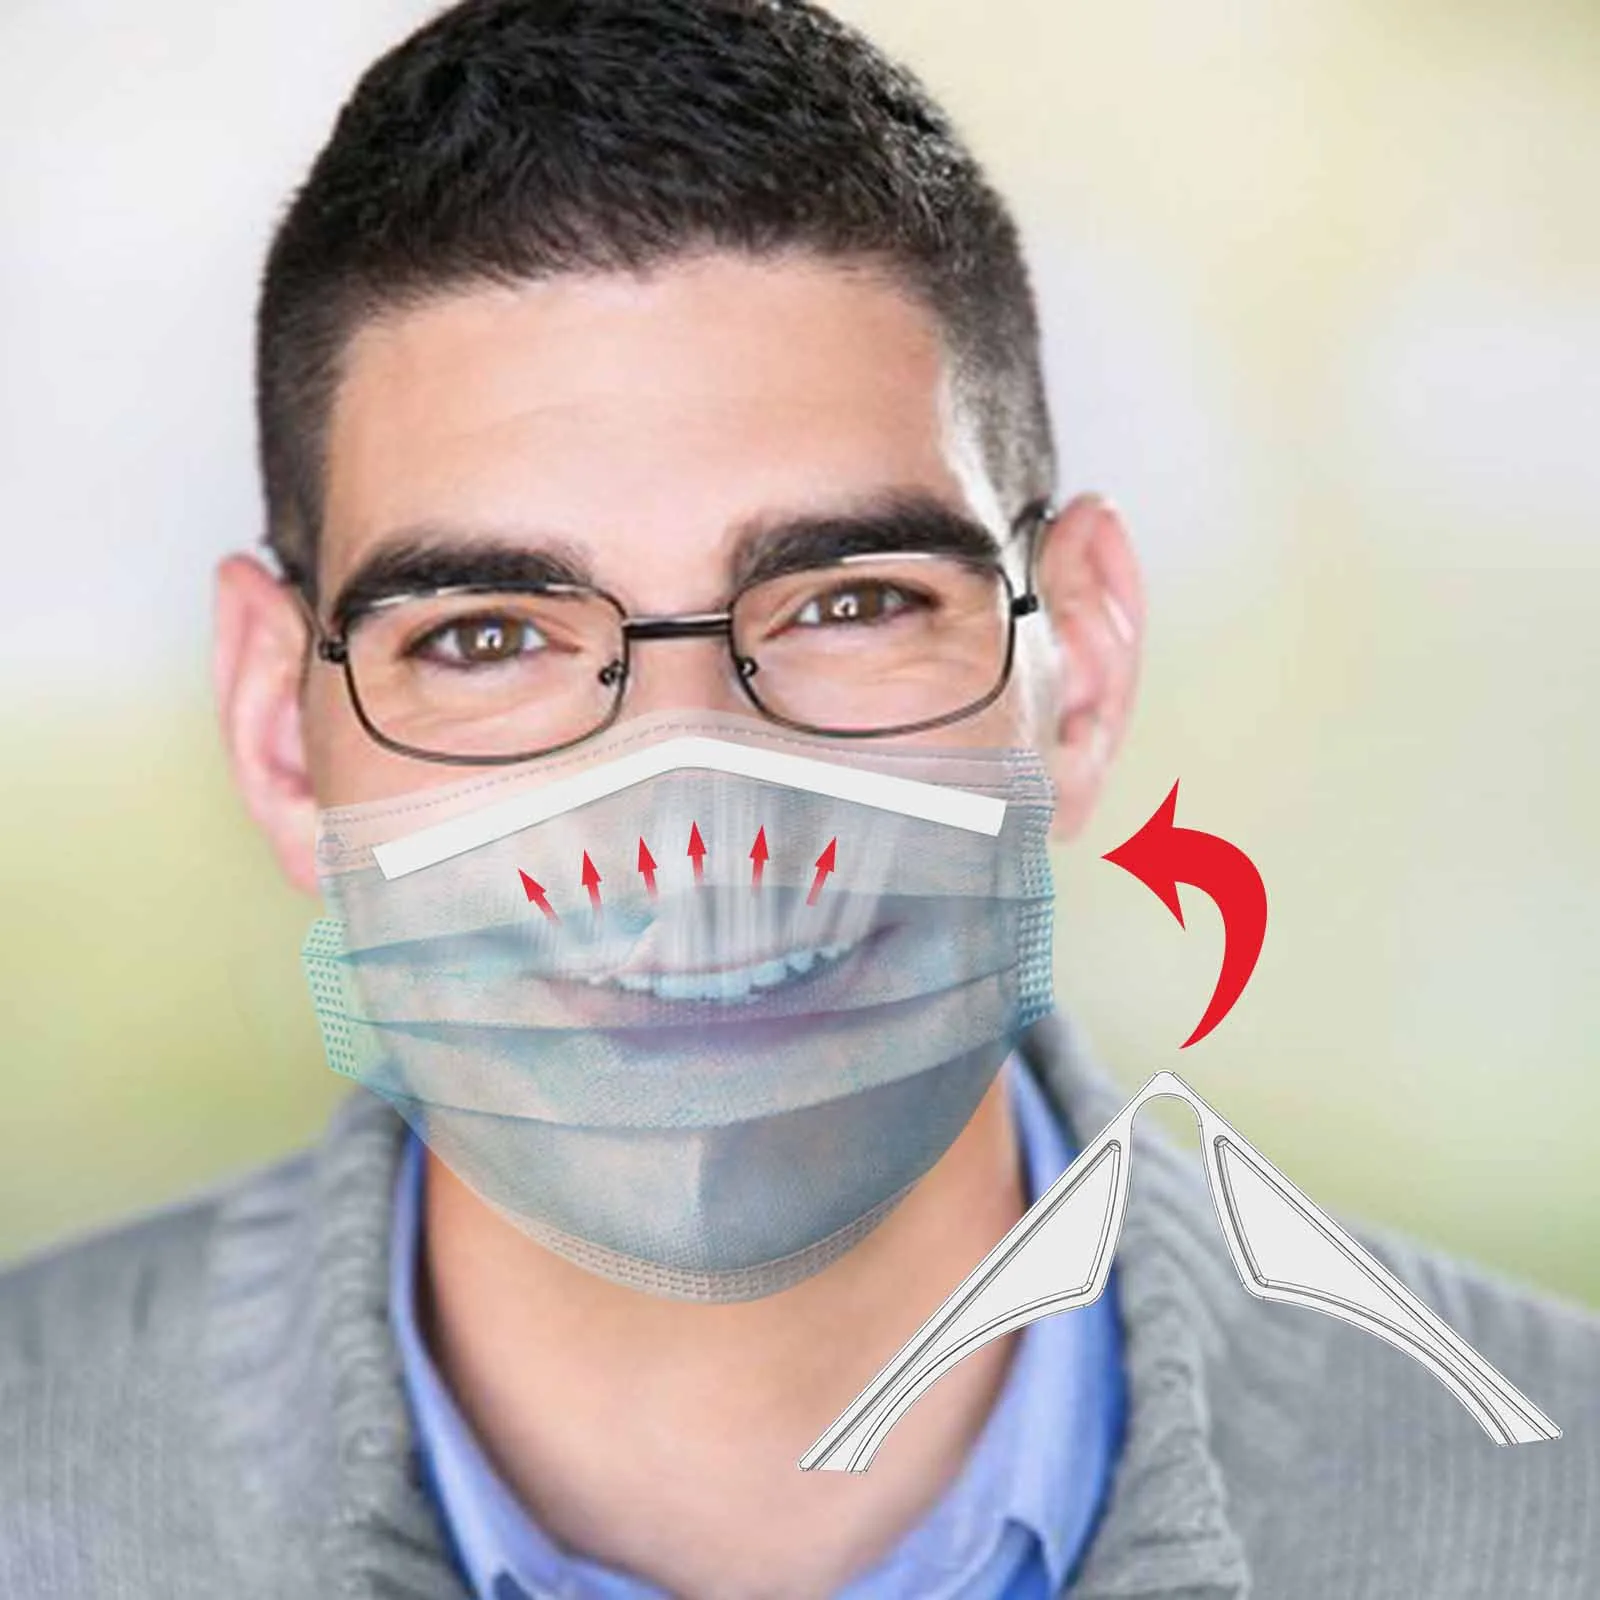 

10pcs Face Mask Silicone Nose Bridge Increases Breathing Space Help Breathe Anti-fogging Nose Bridge Myopia Glasses Mask A30